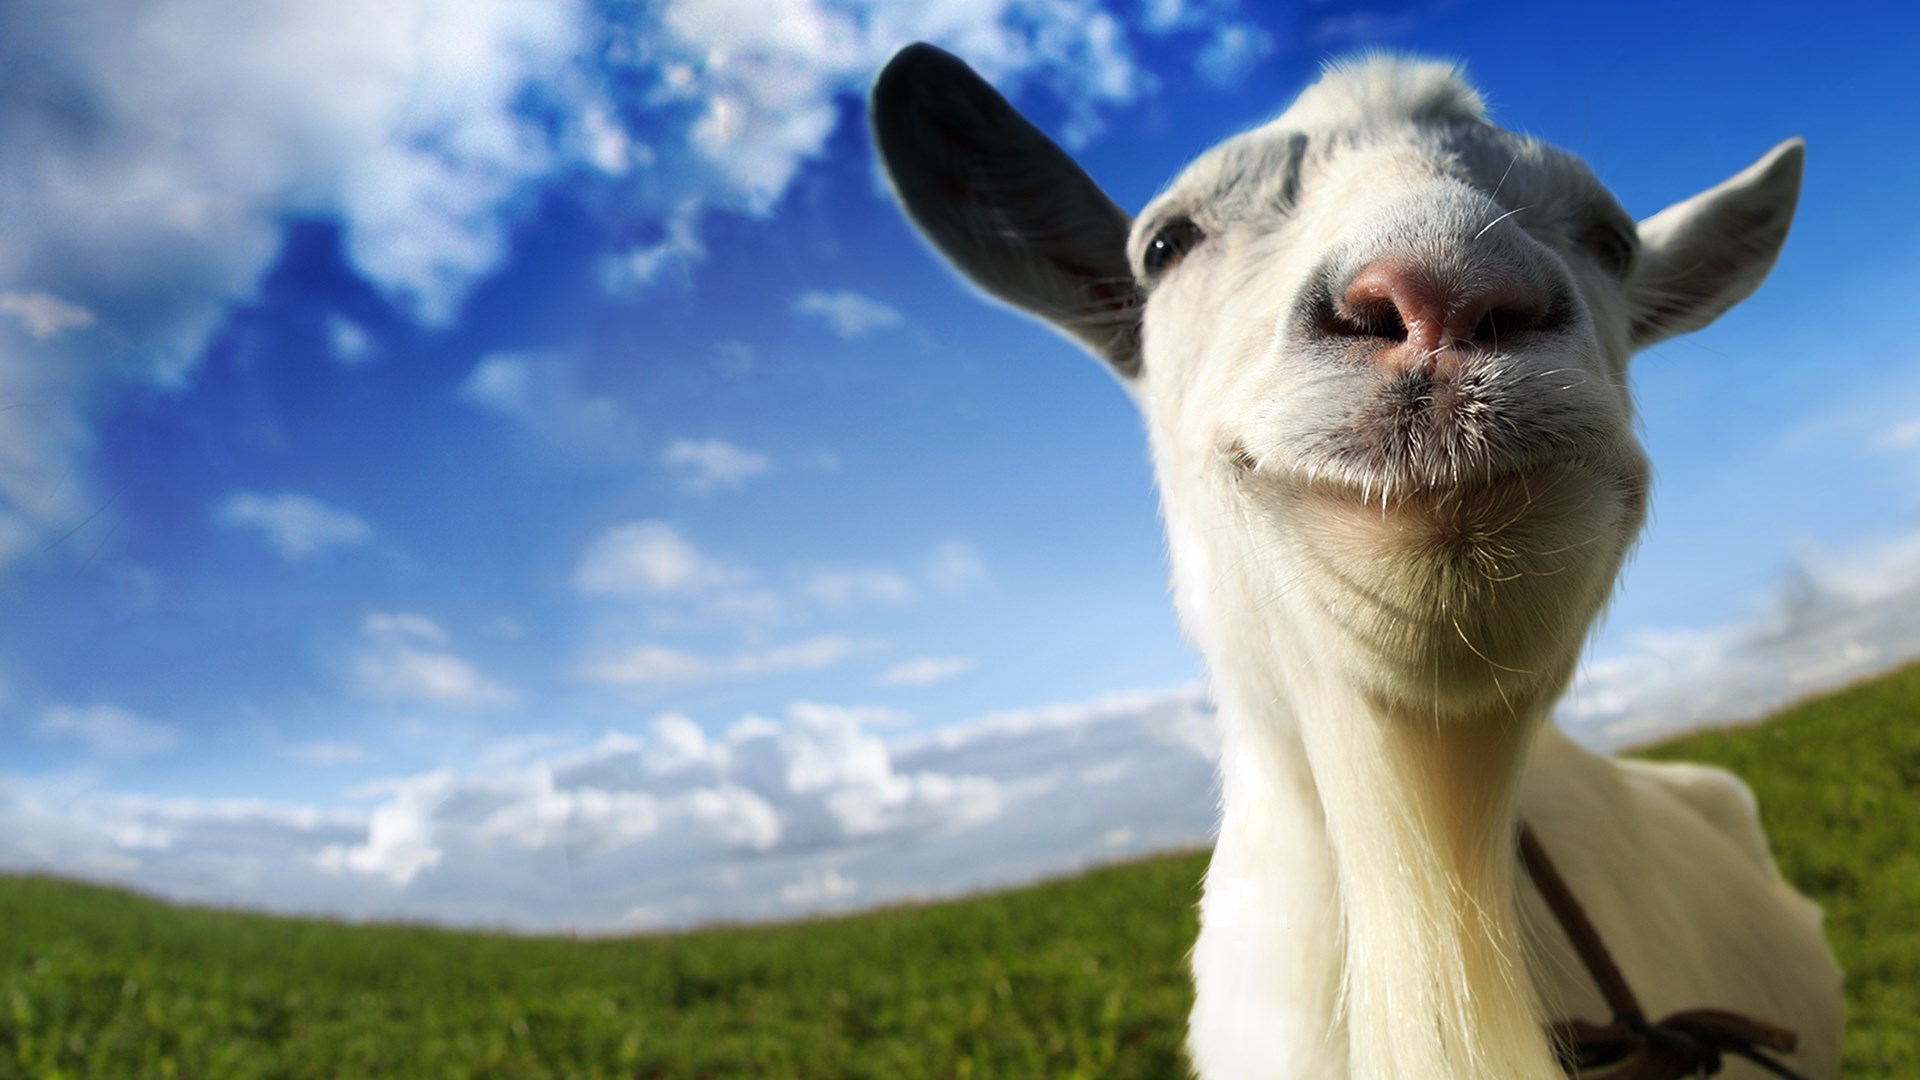 Goat Simulator 3 download the last version for windows